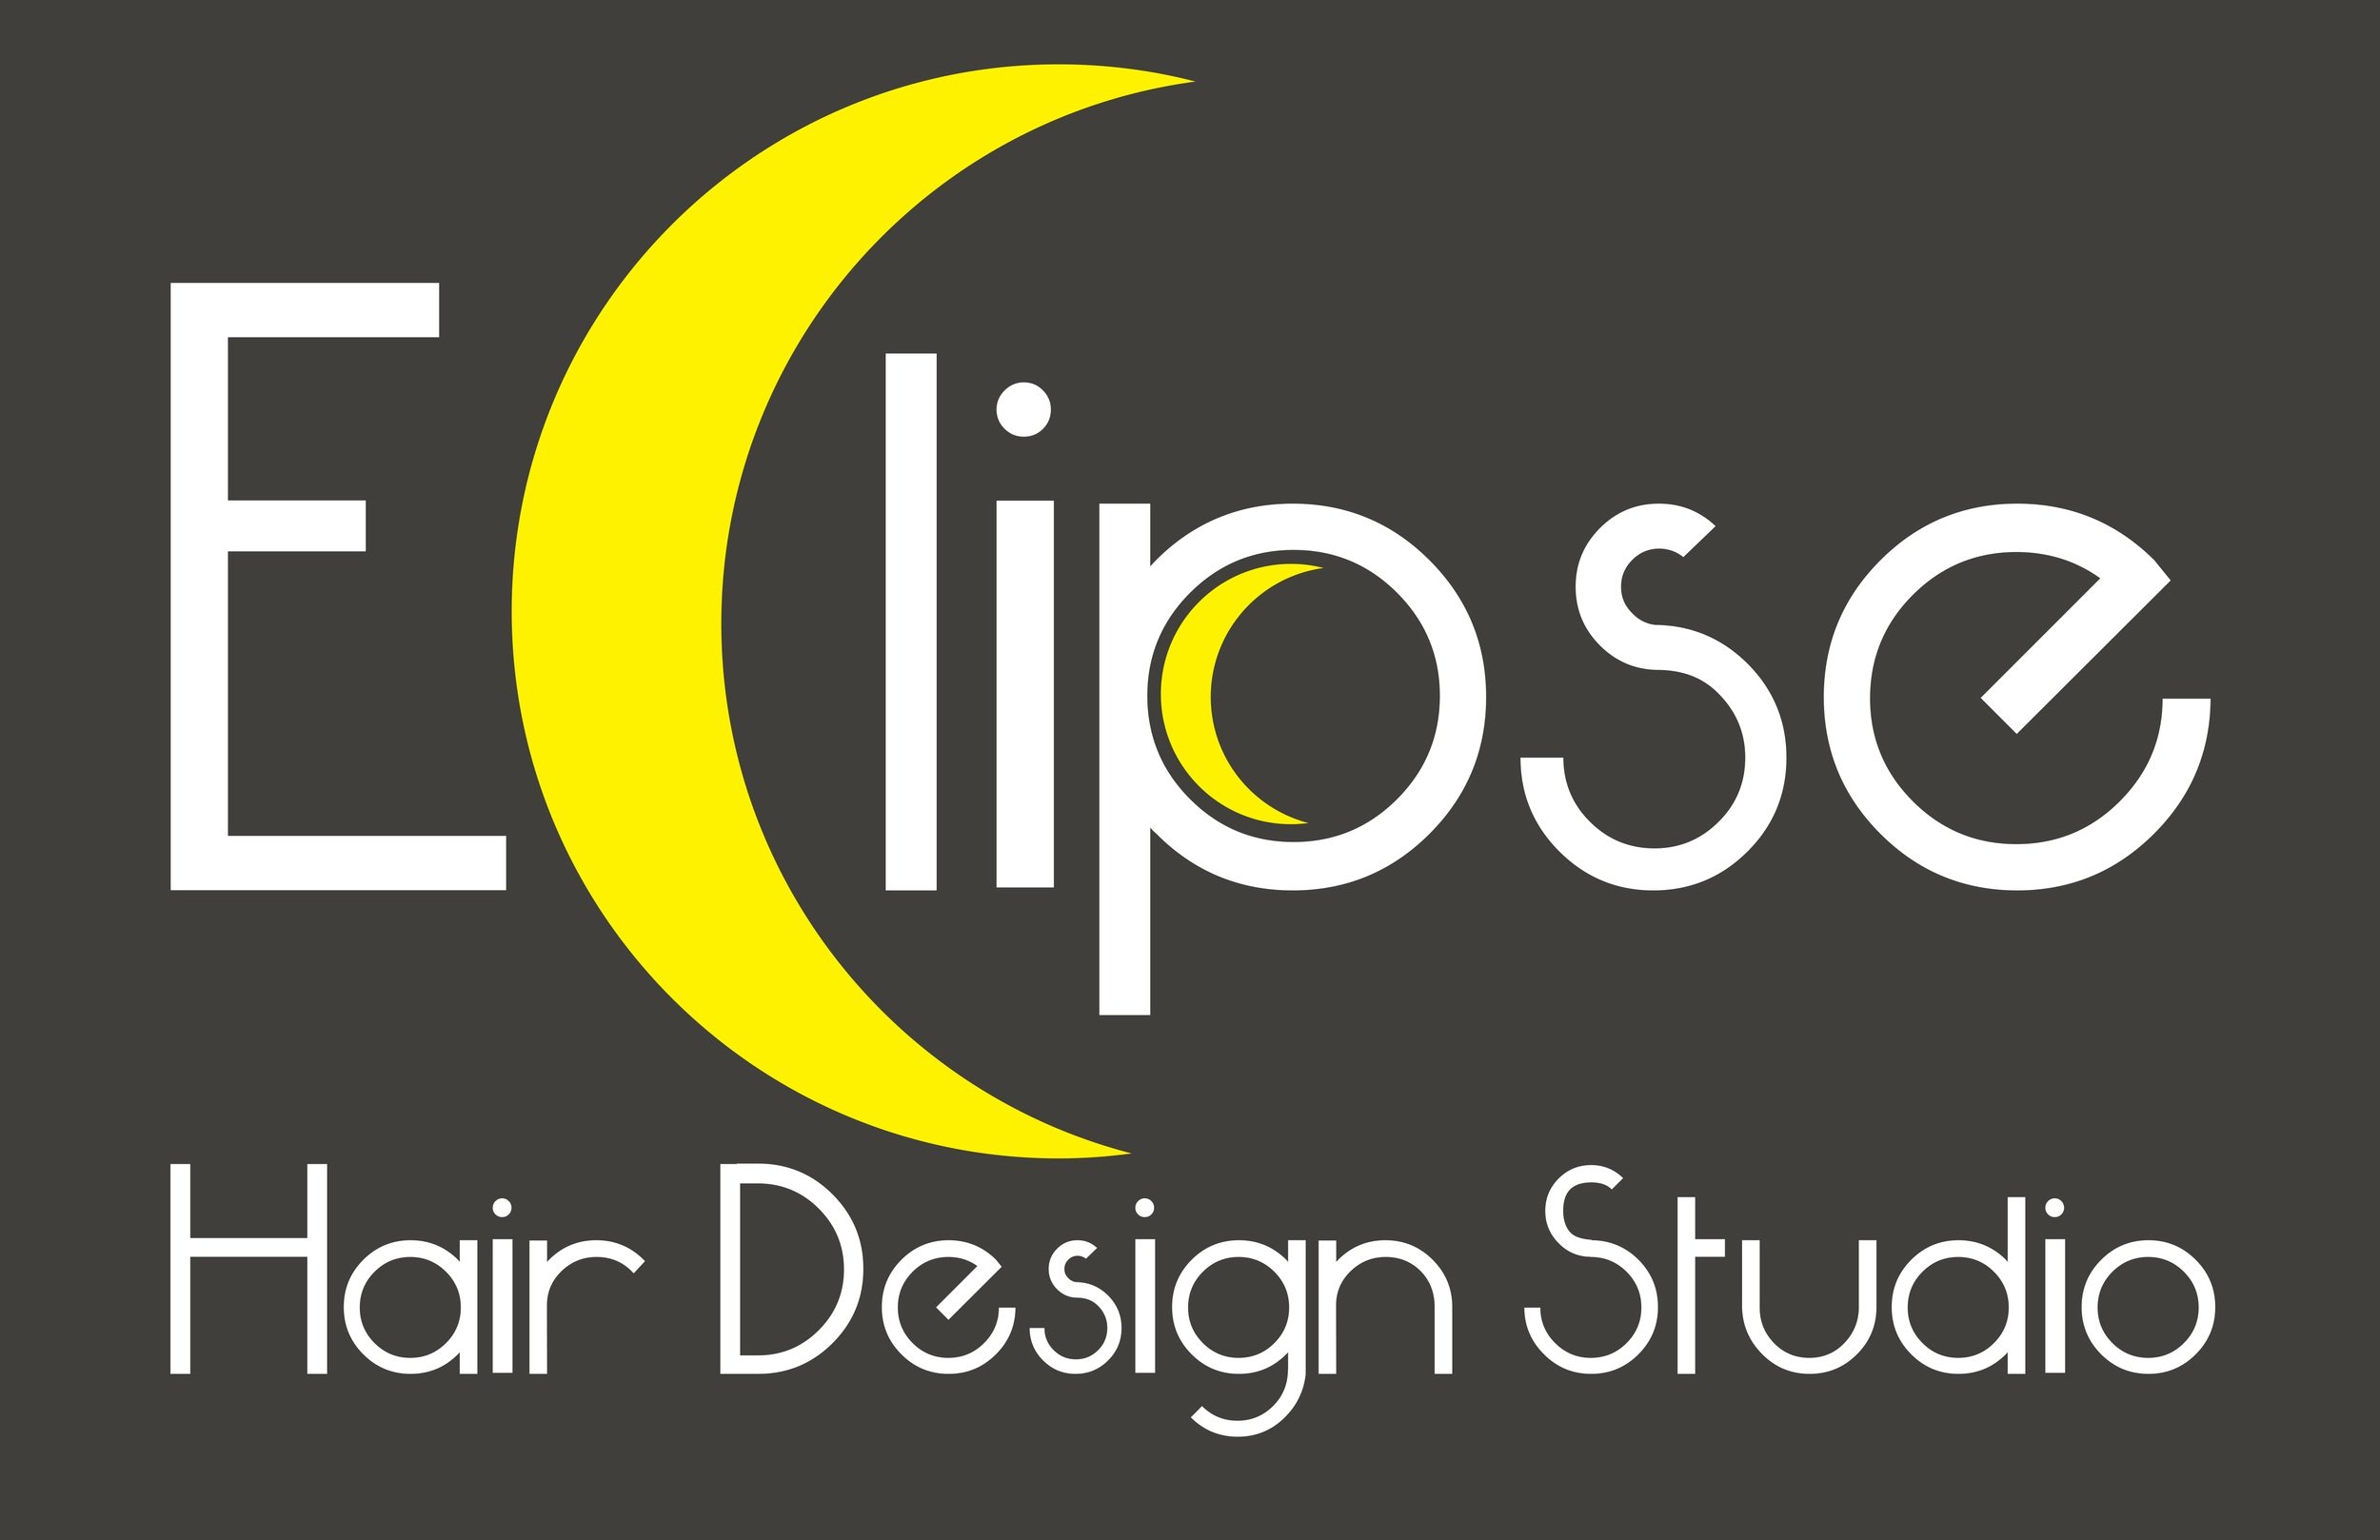 Eclipse Hair Design Studio